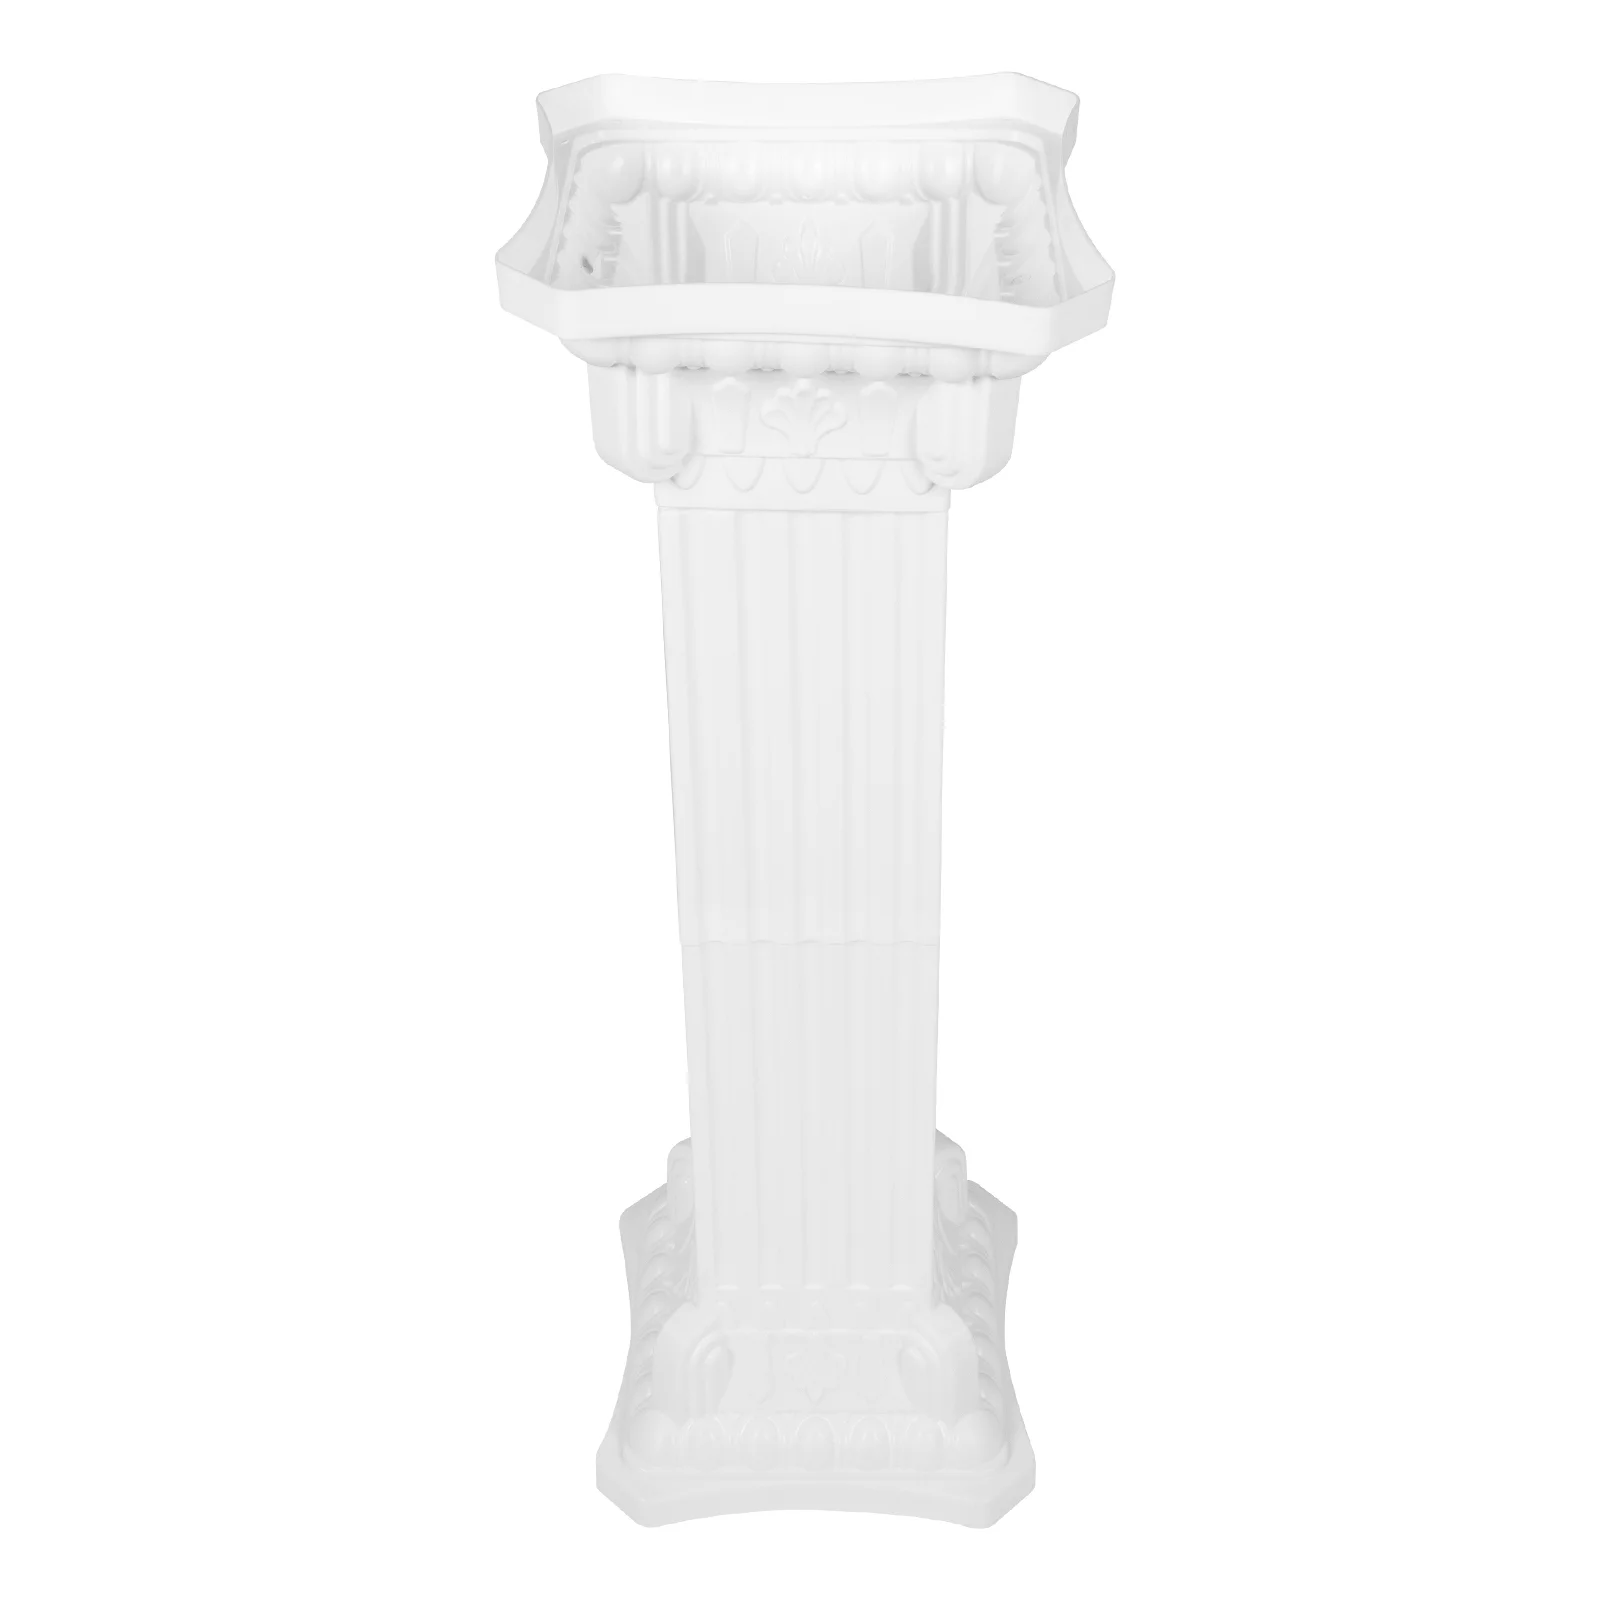 

Roman Column Outdoor Tabletop Decor Road Guide Pillar Wedding Post Party Supply Plastic Bride Guiding Adornment Statue